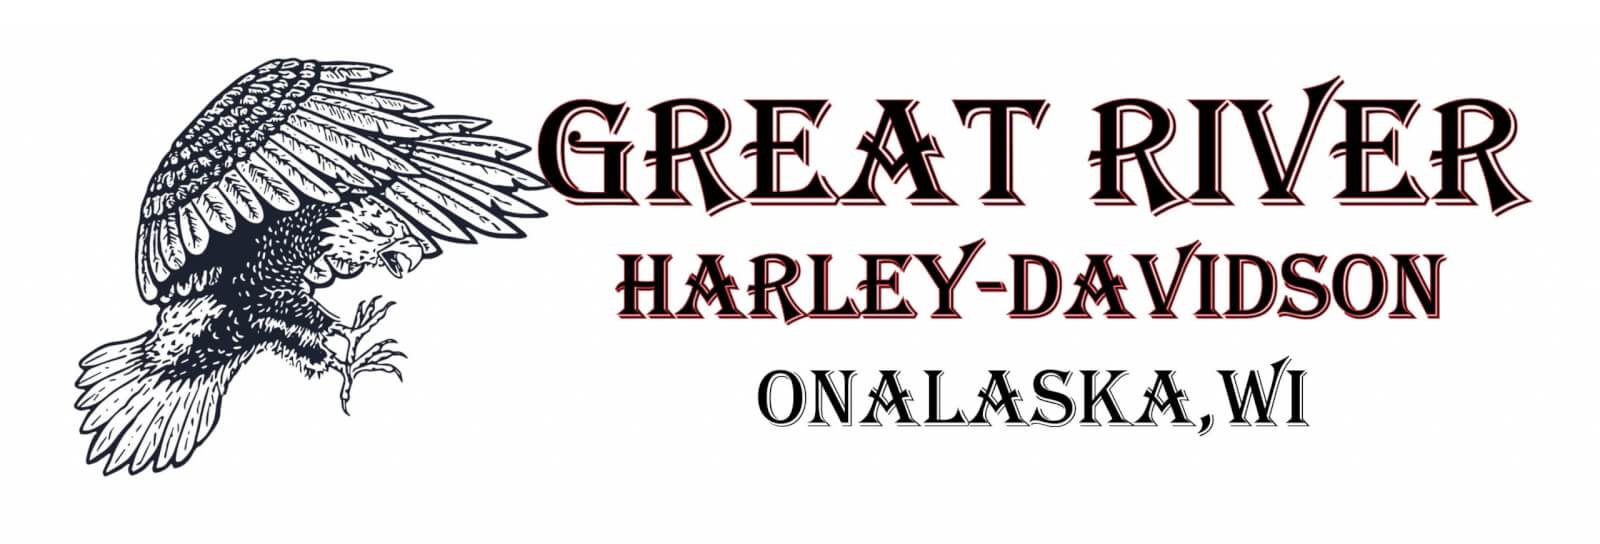 Great River Harley Davidson Explorelacrosse